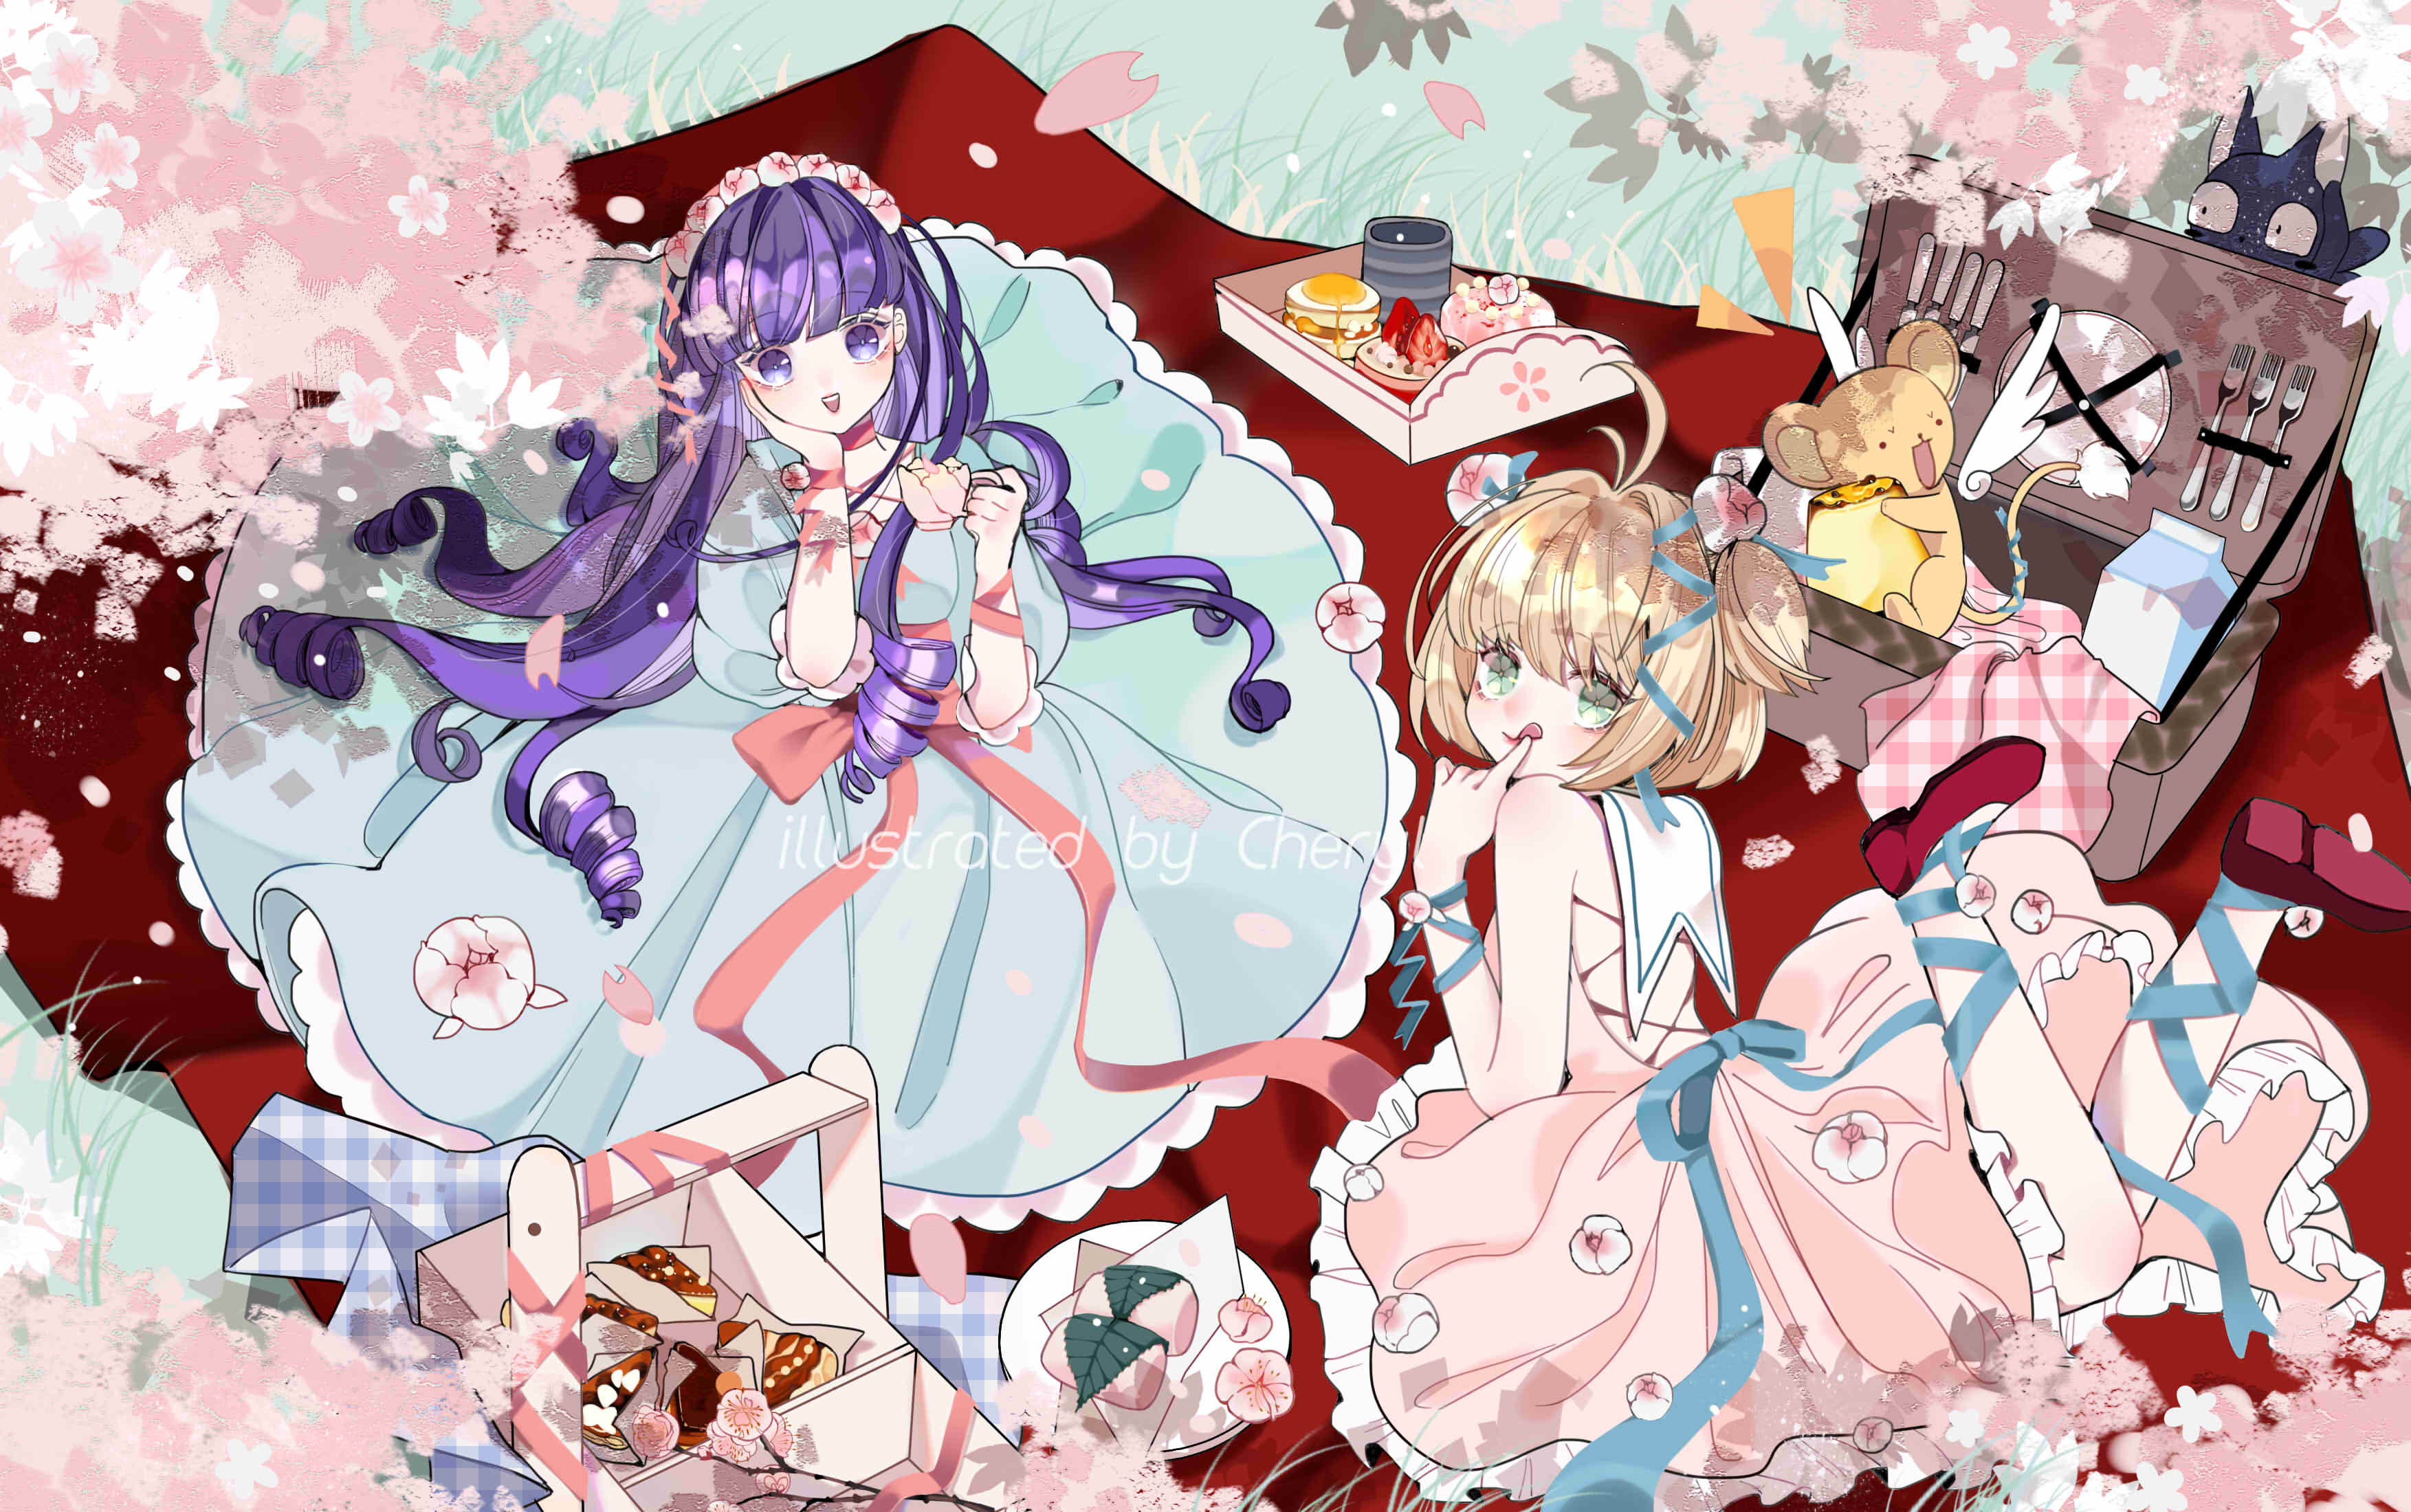 Descarga gratis la imagen Animado, Sakura Cazadora De Cartas, Sakura Kinomoto, Tomoyo Daidou Ji, Keroberos (Card Captor Sakura) en el escritorio de tu PC